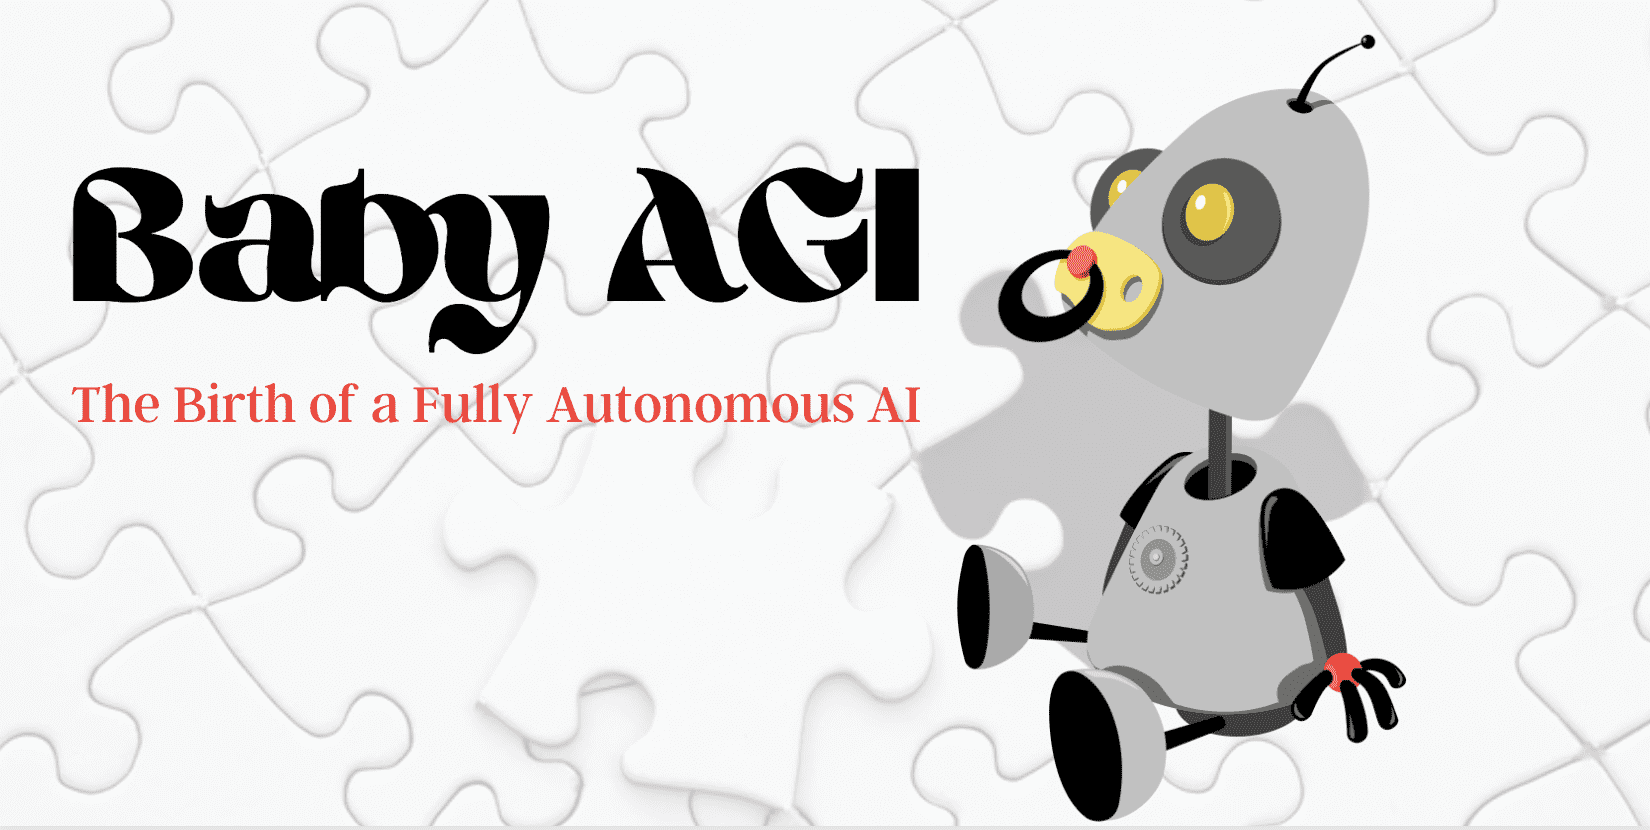 Baby AGI: The Birth of a Fully Autonomous AI